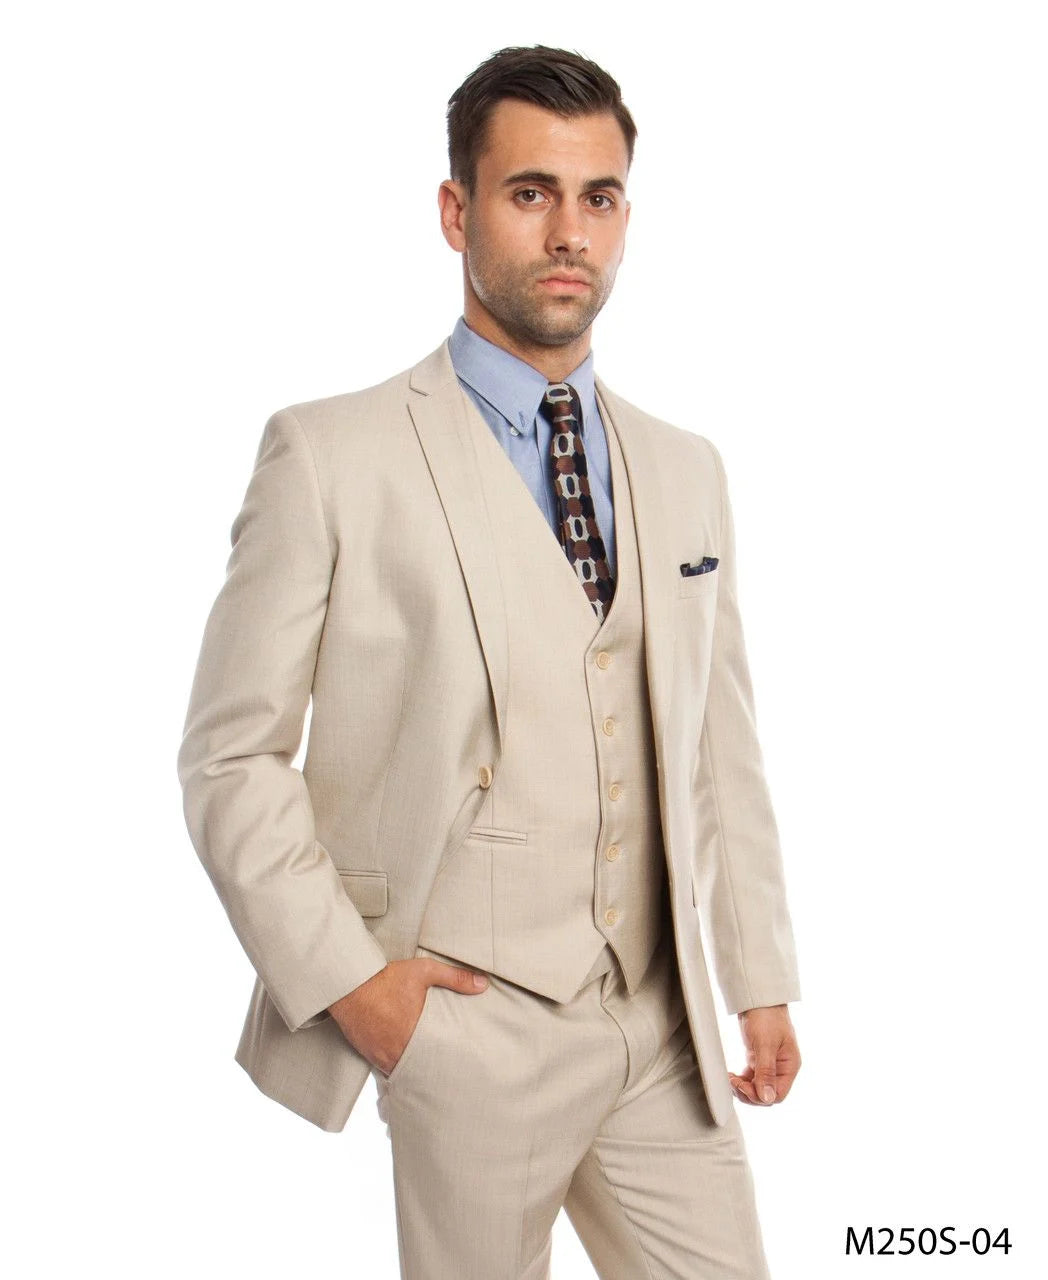 Look   Tazio Men's 3 Piece Slim Fit Executive Suit Stylish Business Look